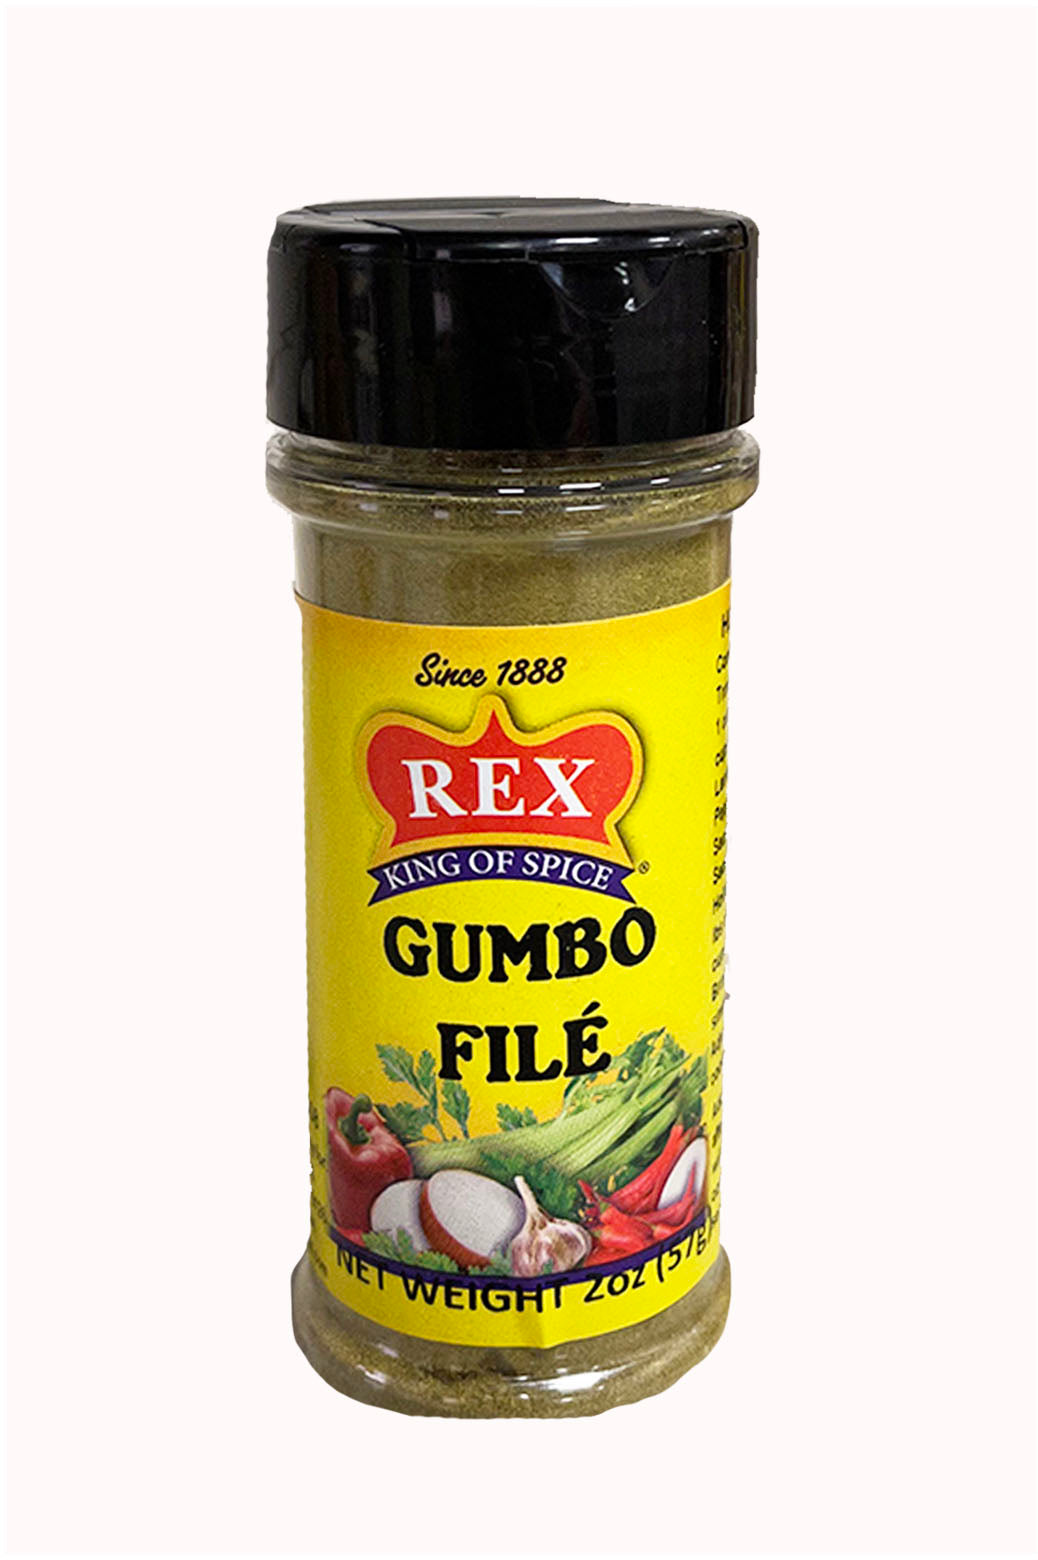 Rex Gumbo File